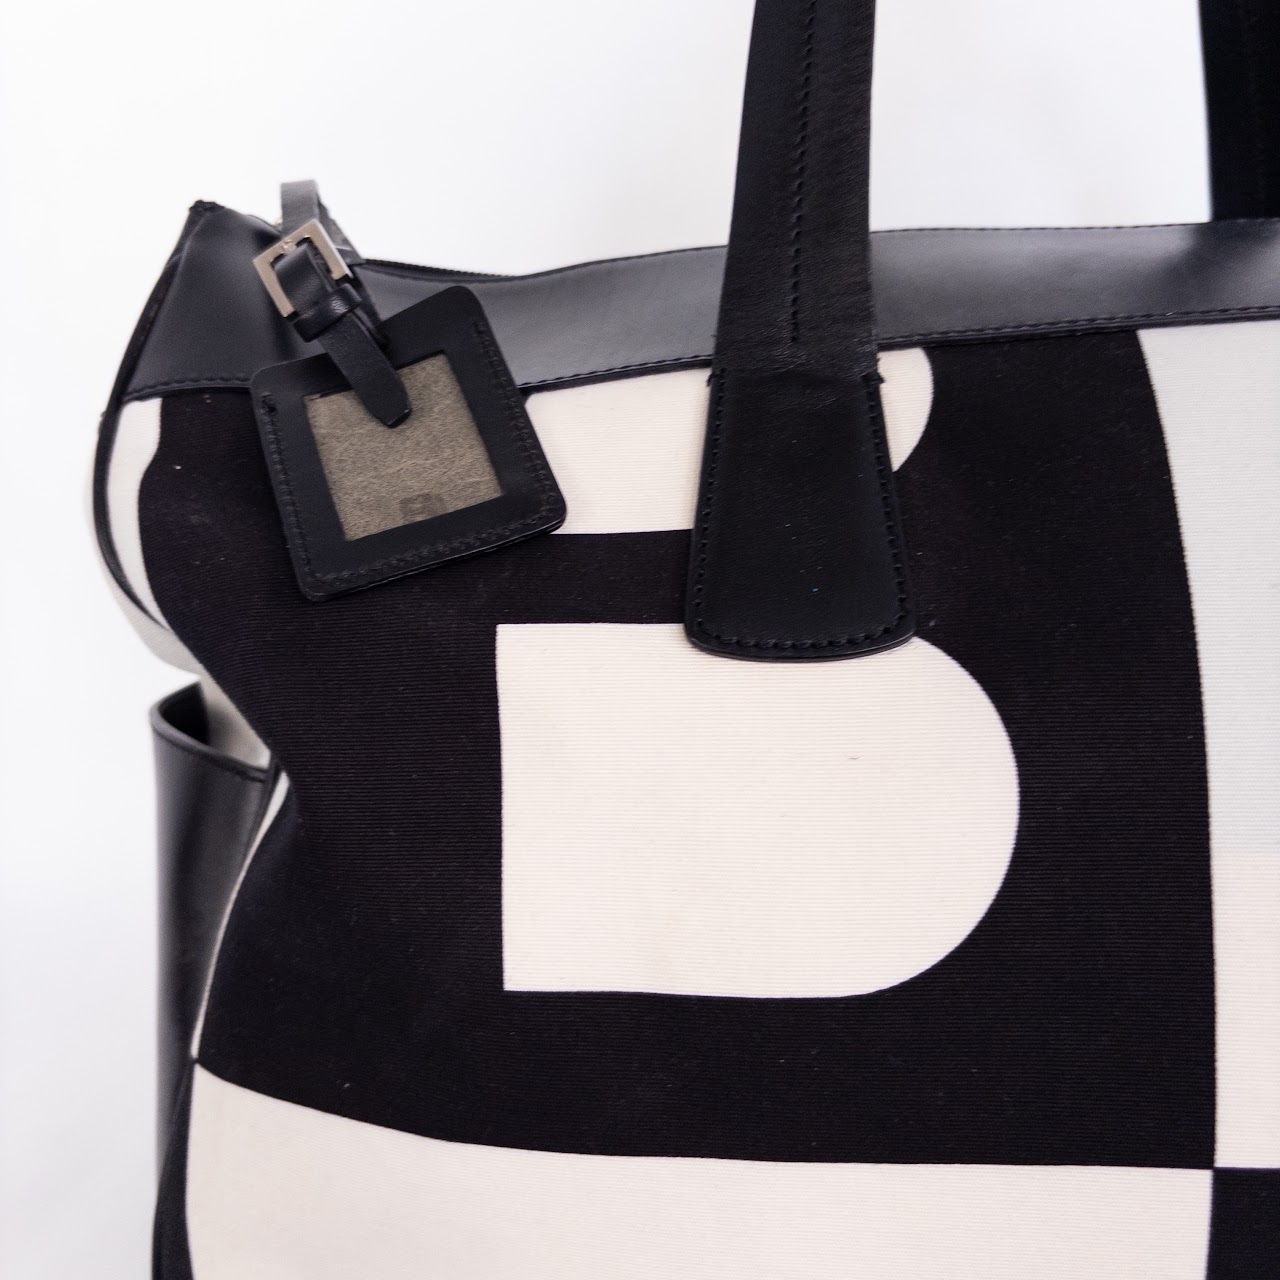 Bally Black and White Duffel Bag